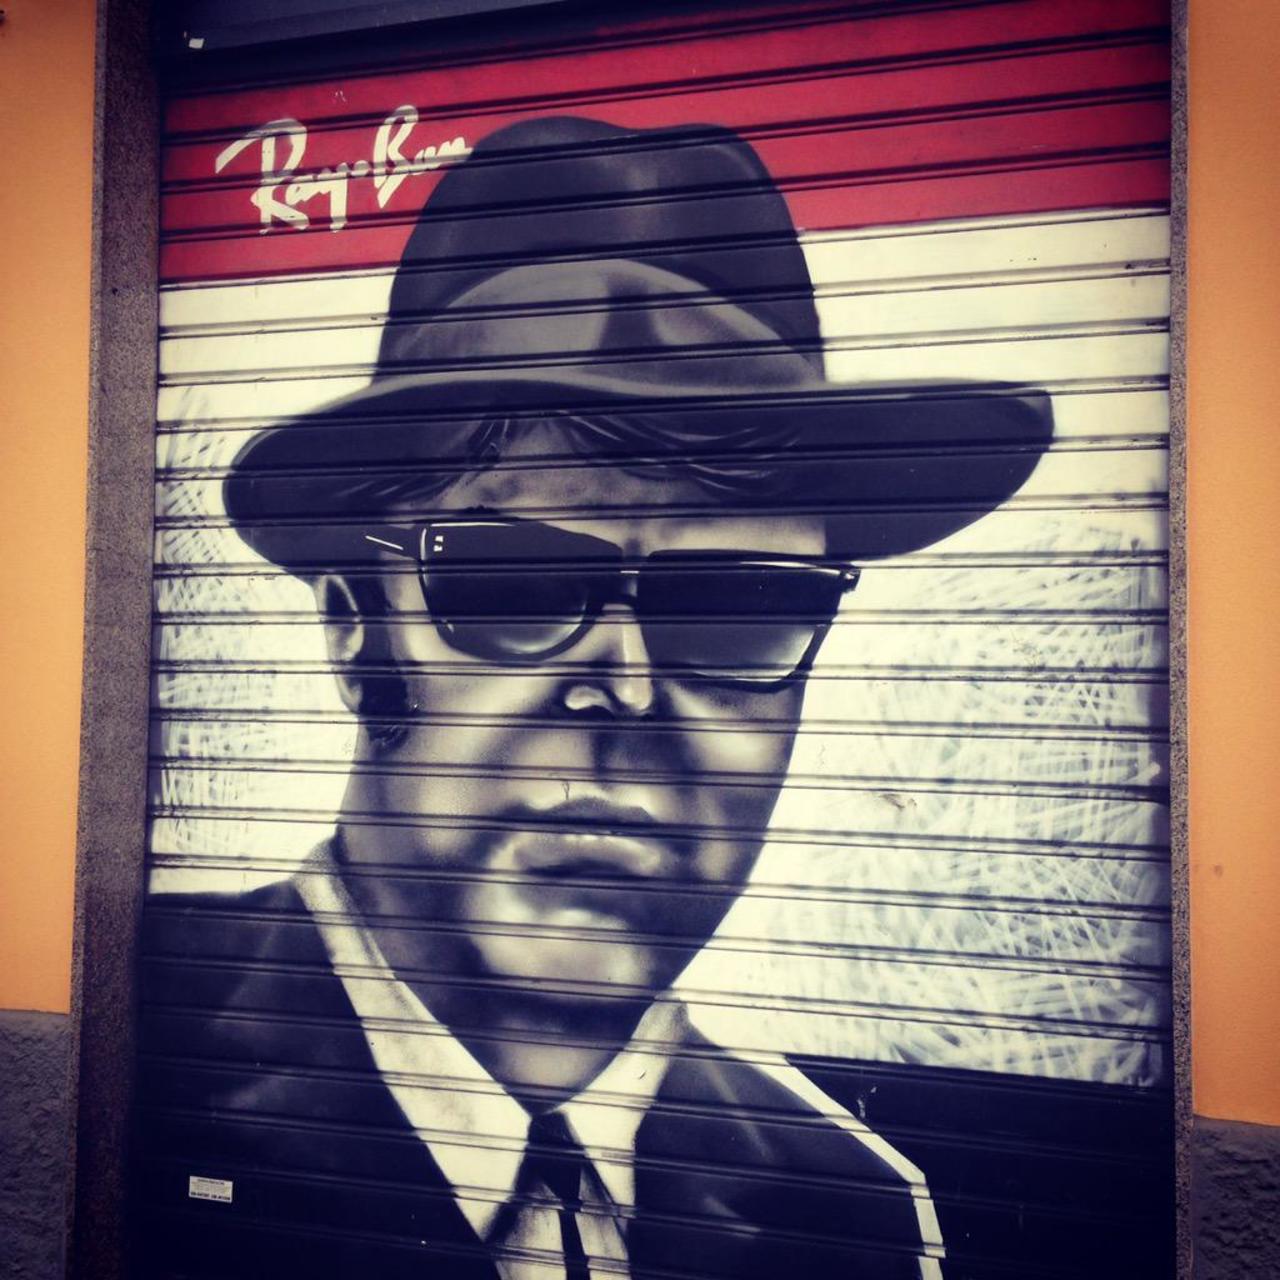 #streetart #milano #graffiti #graffitiart http://t.co/84LhFvk4TY